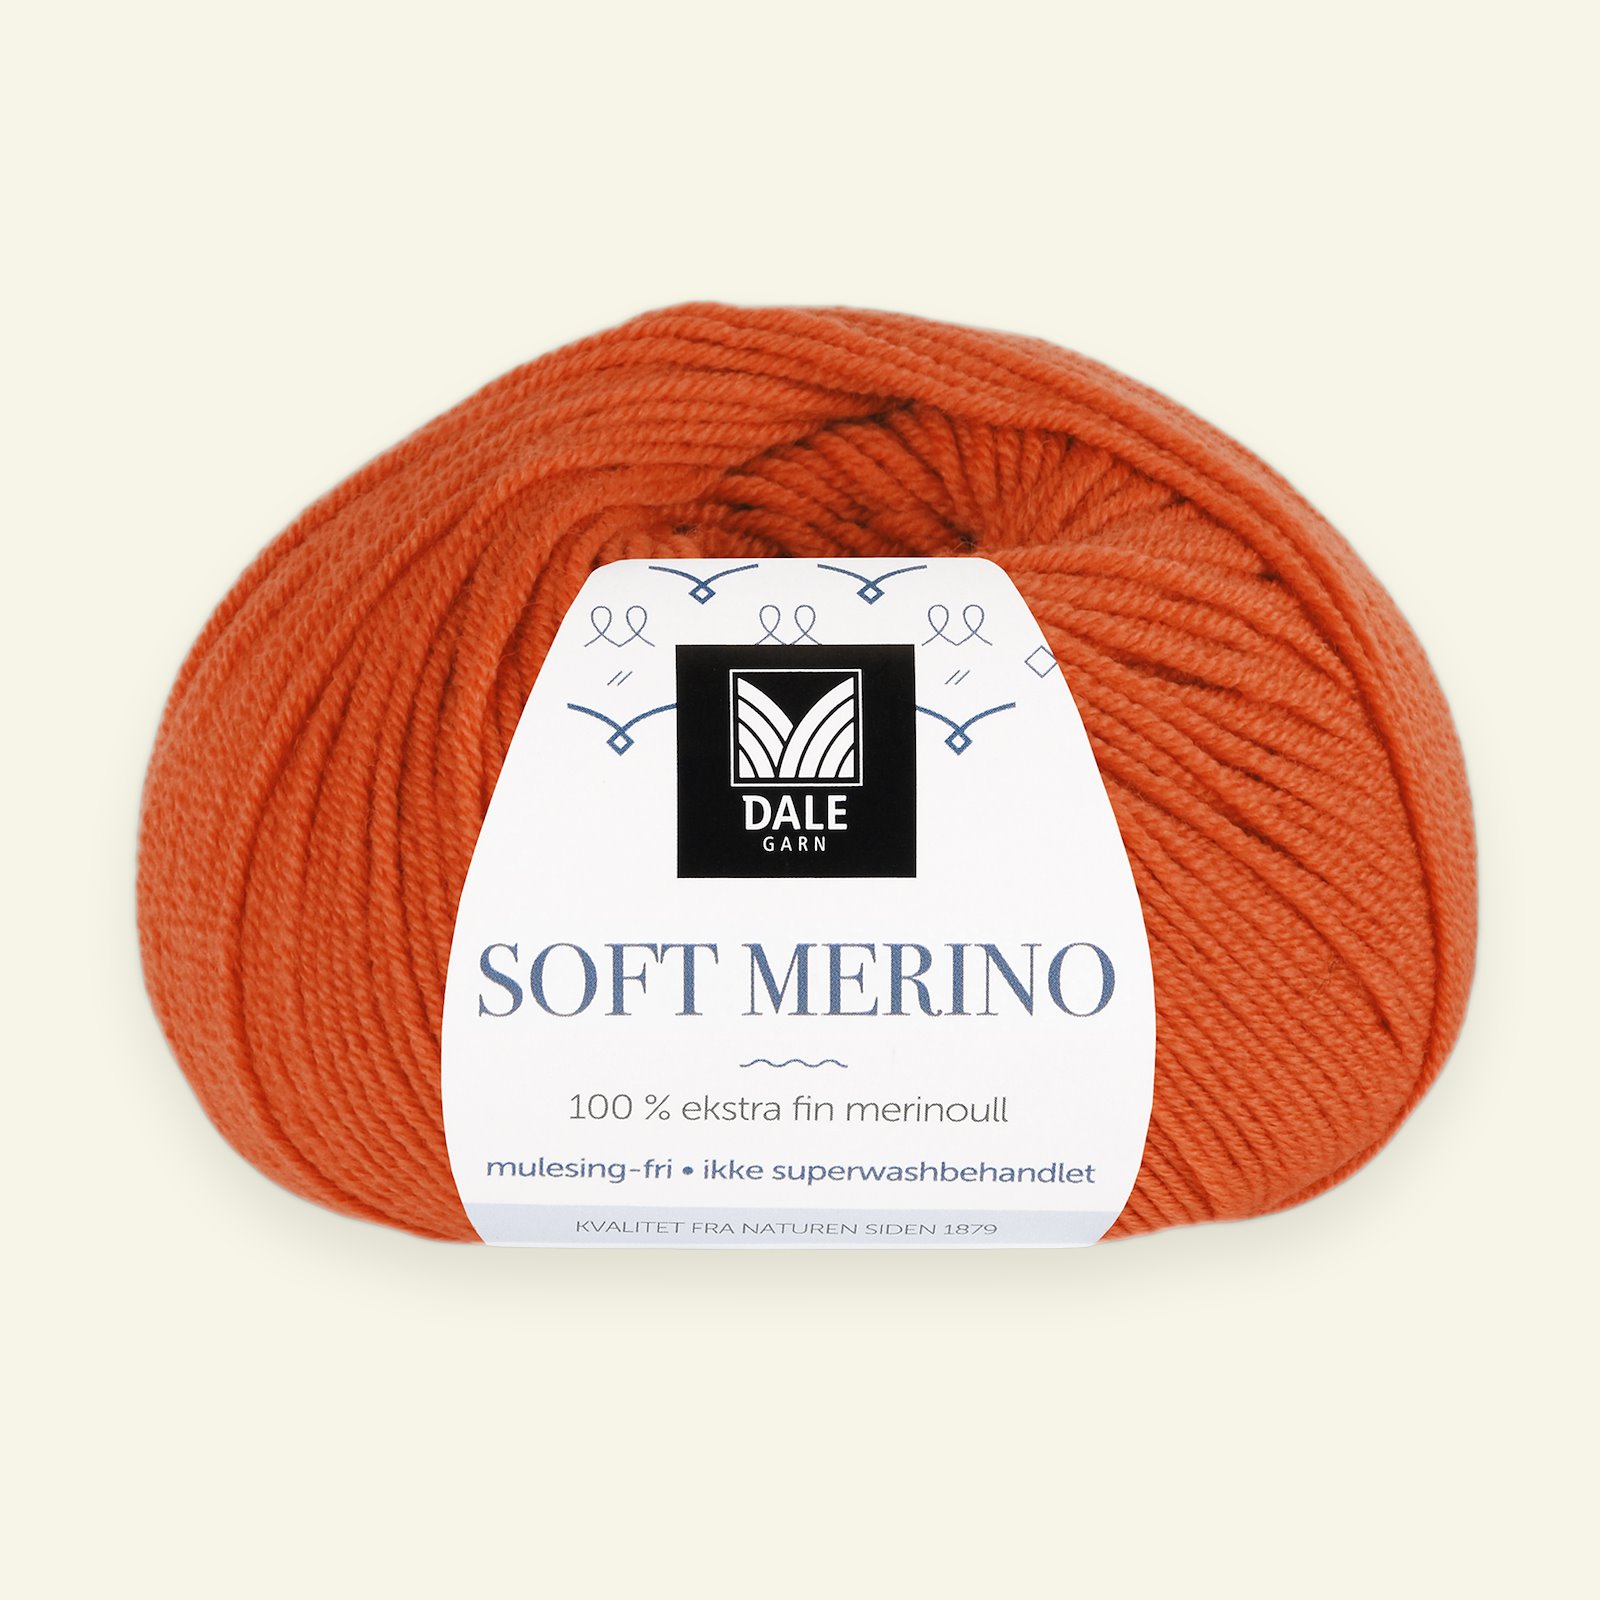 Dale Garn, 100% ekstra fint merinogarn "Soft Merino", orange (3033) 90000354_pack